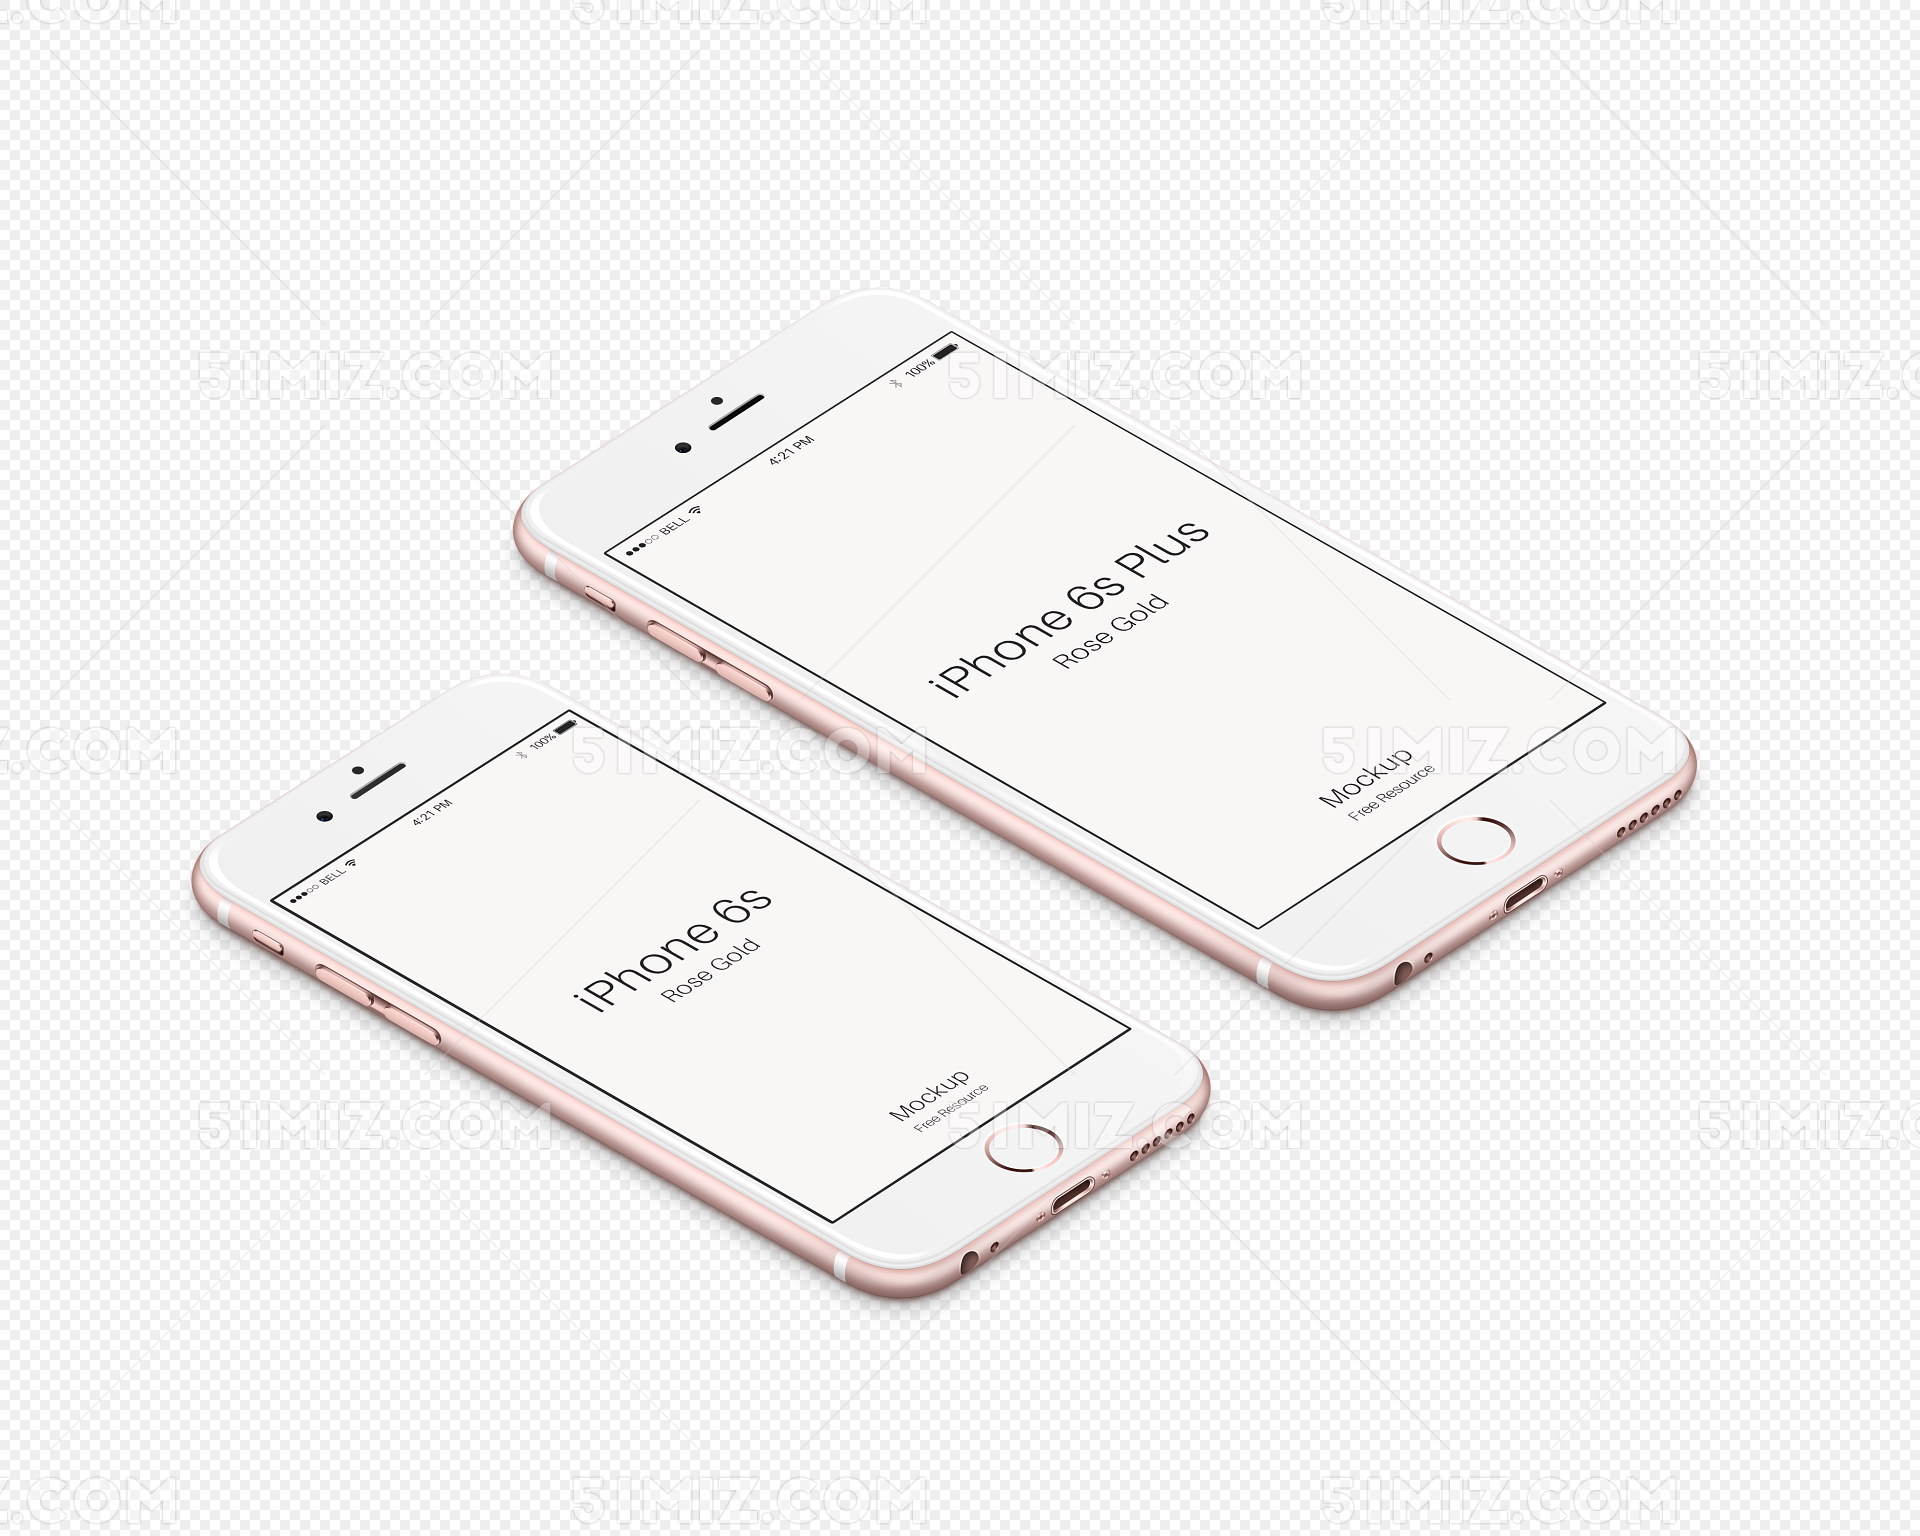 苹果iPhone 6s玫瑰金 3D模型 $49 - .max .obj .fbx .c4d .3ds - Free3D